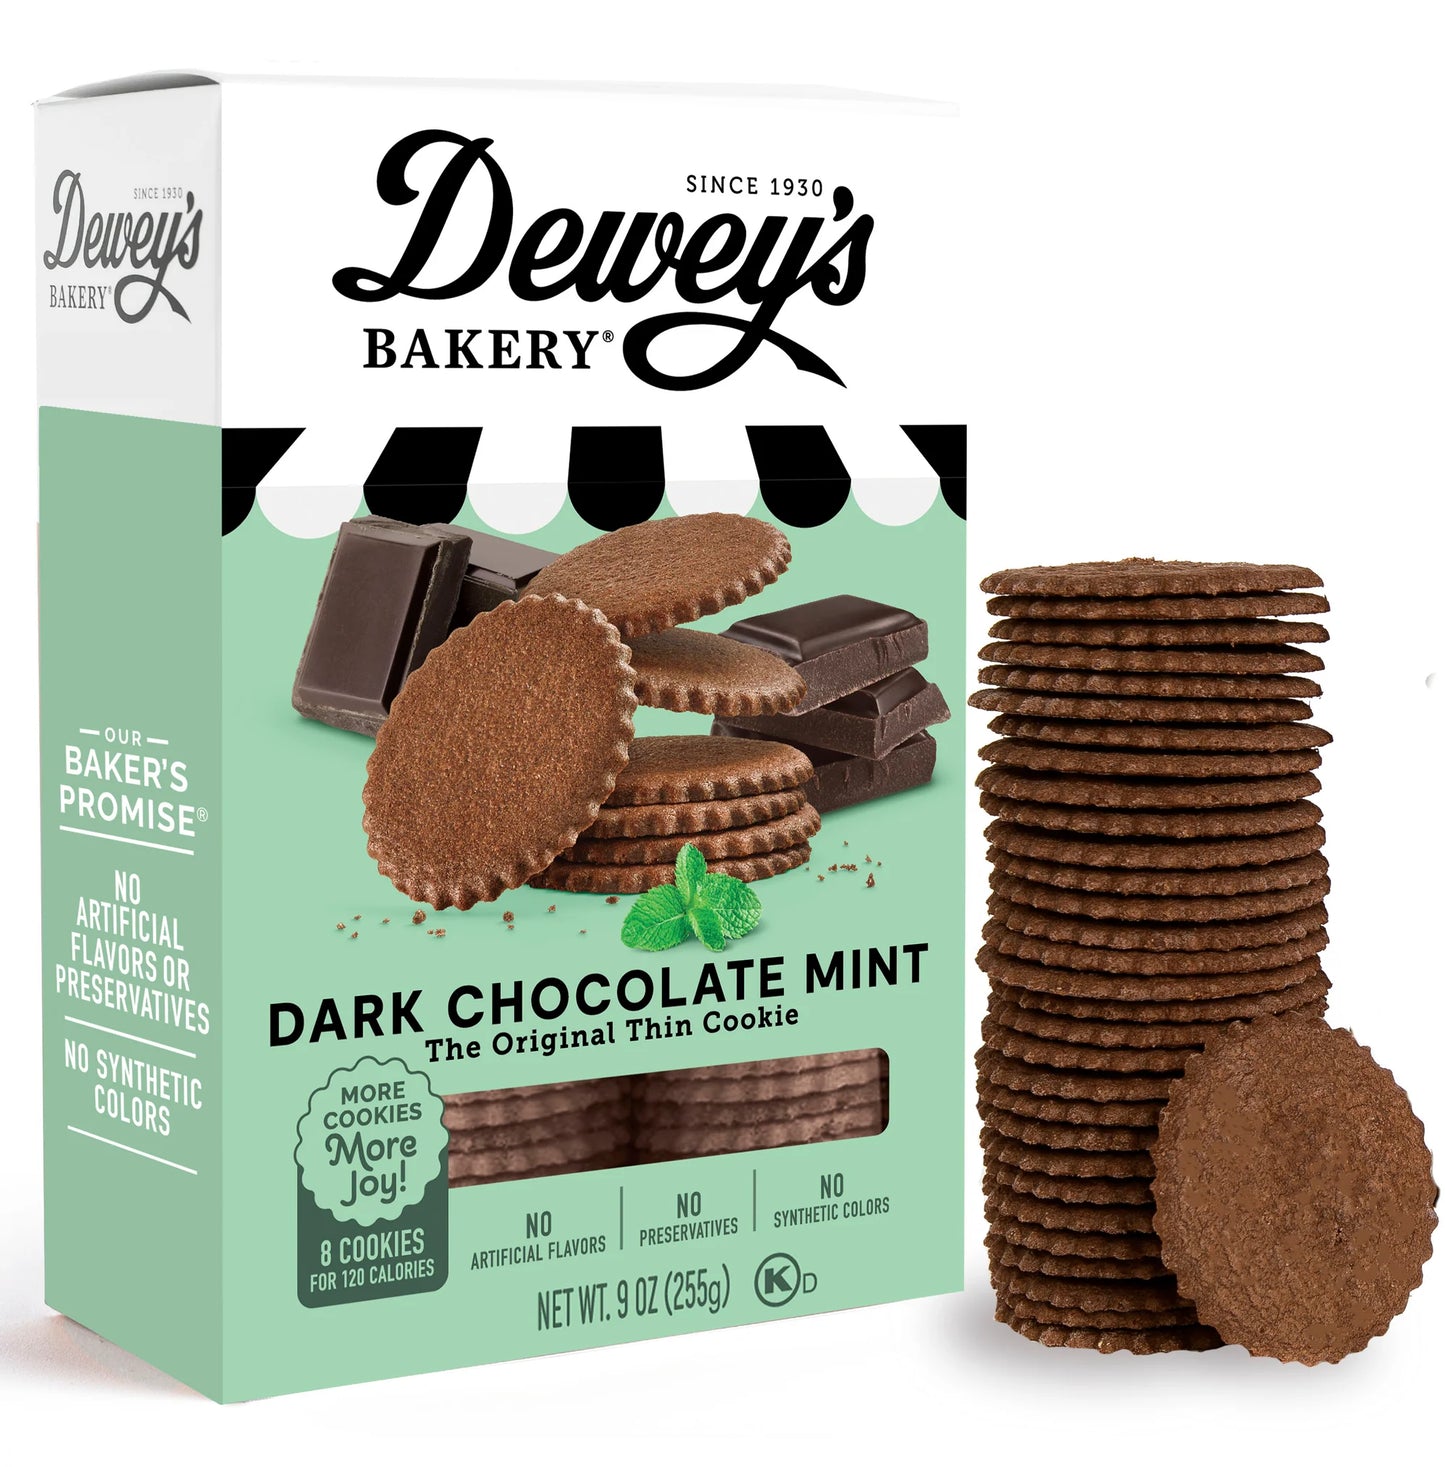 Dewey’s Dark Chocolate Mint Cookie Box